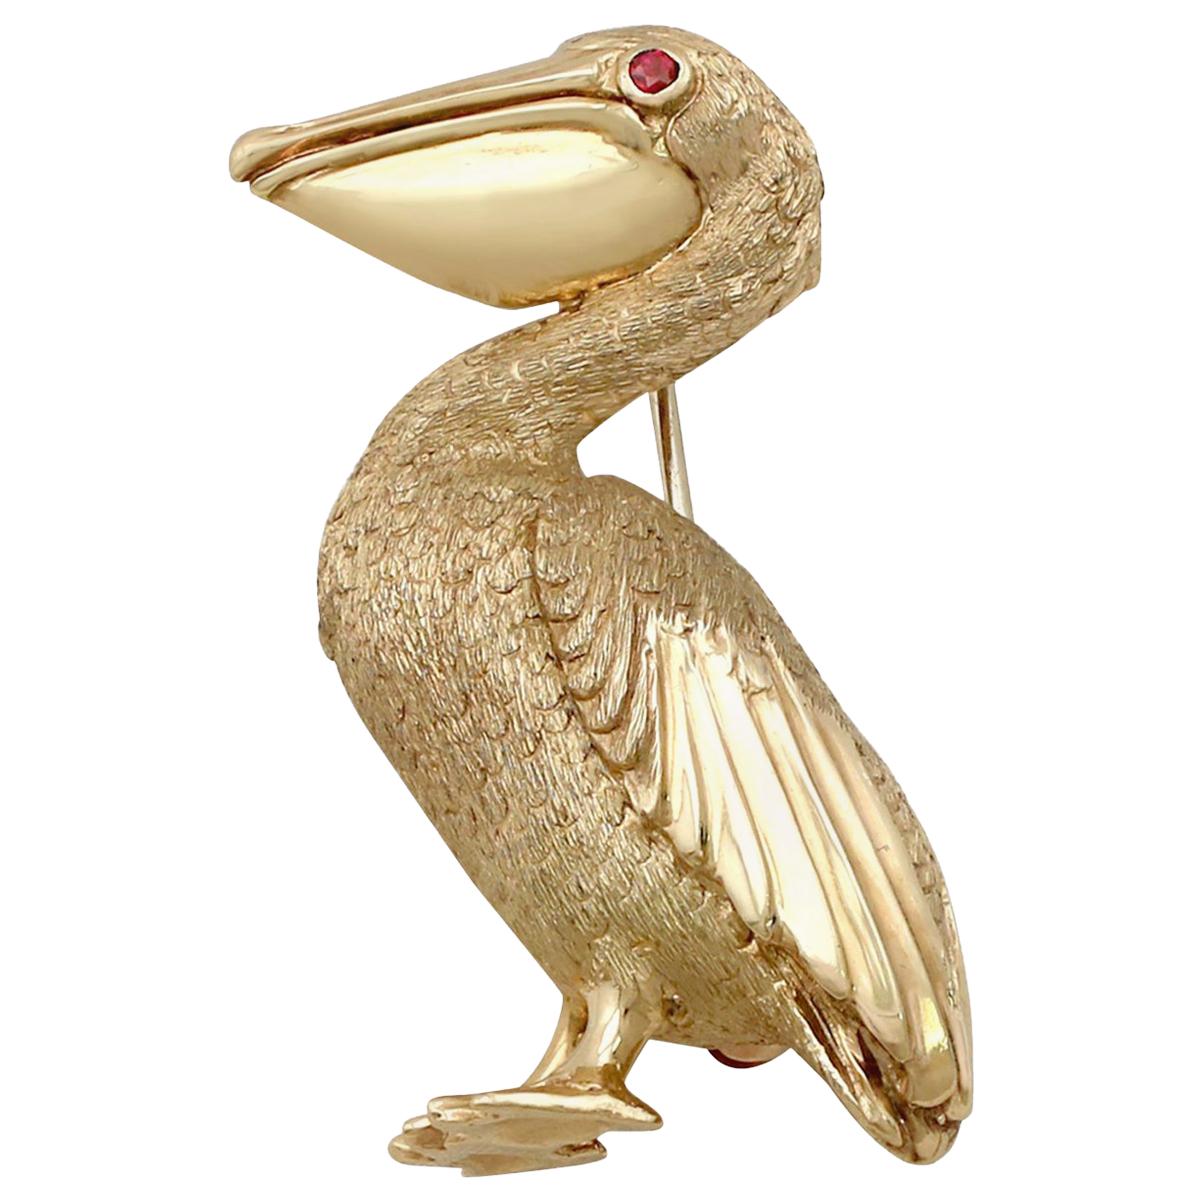 Unusual 1960s vintage pelican novelty brooch made in Soviet Russia